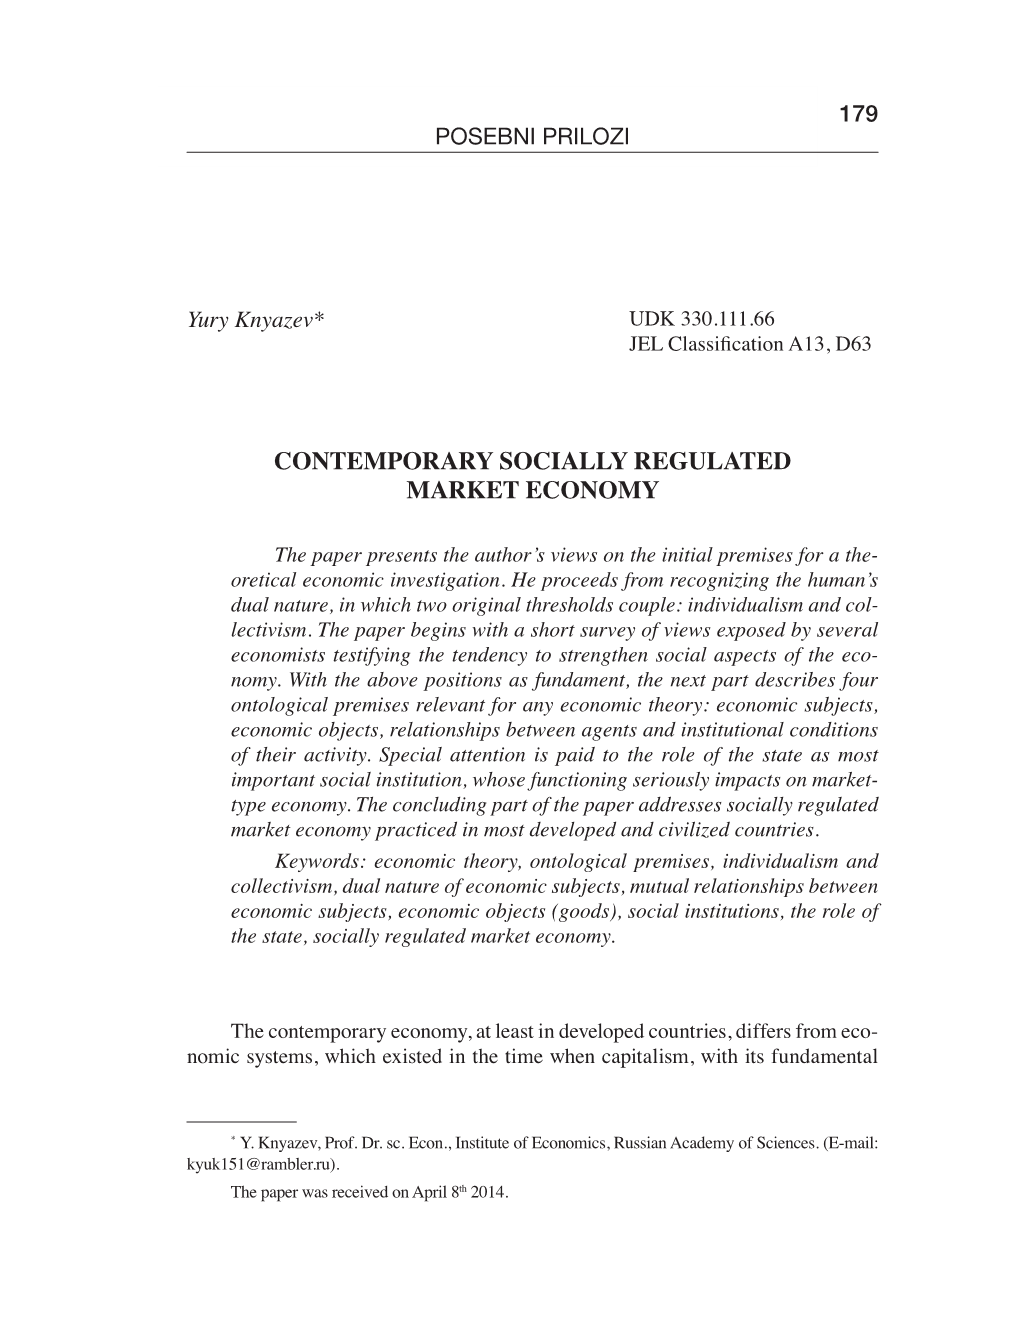 Contemporary Socially Regulated Market Economy 179 EKONOMSKI PREGLED, 65 (2) 179•193 (2014) POSEBNI PRILOZI